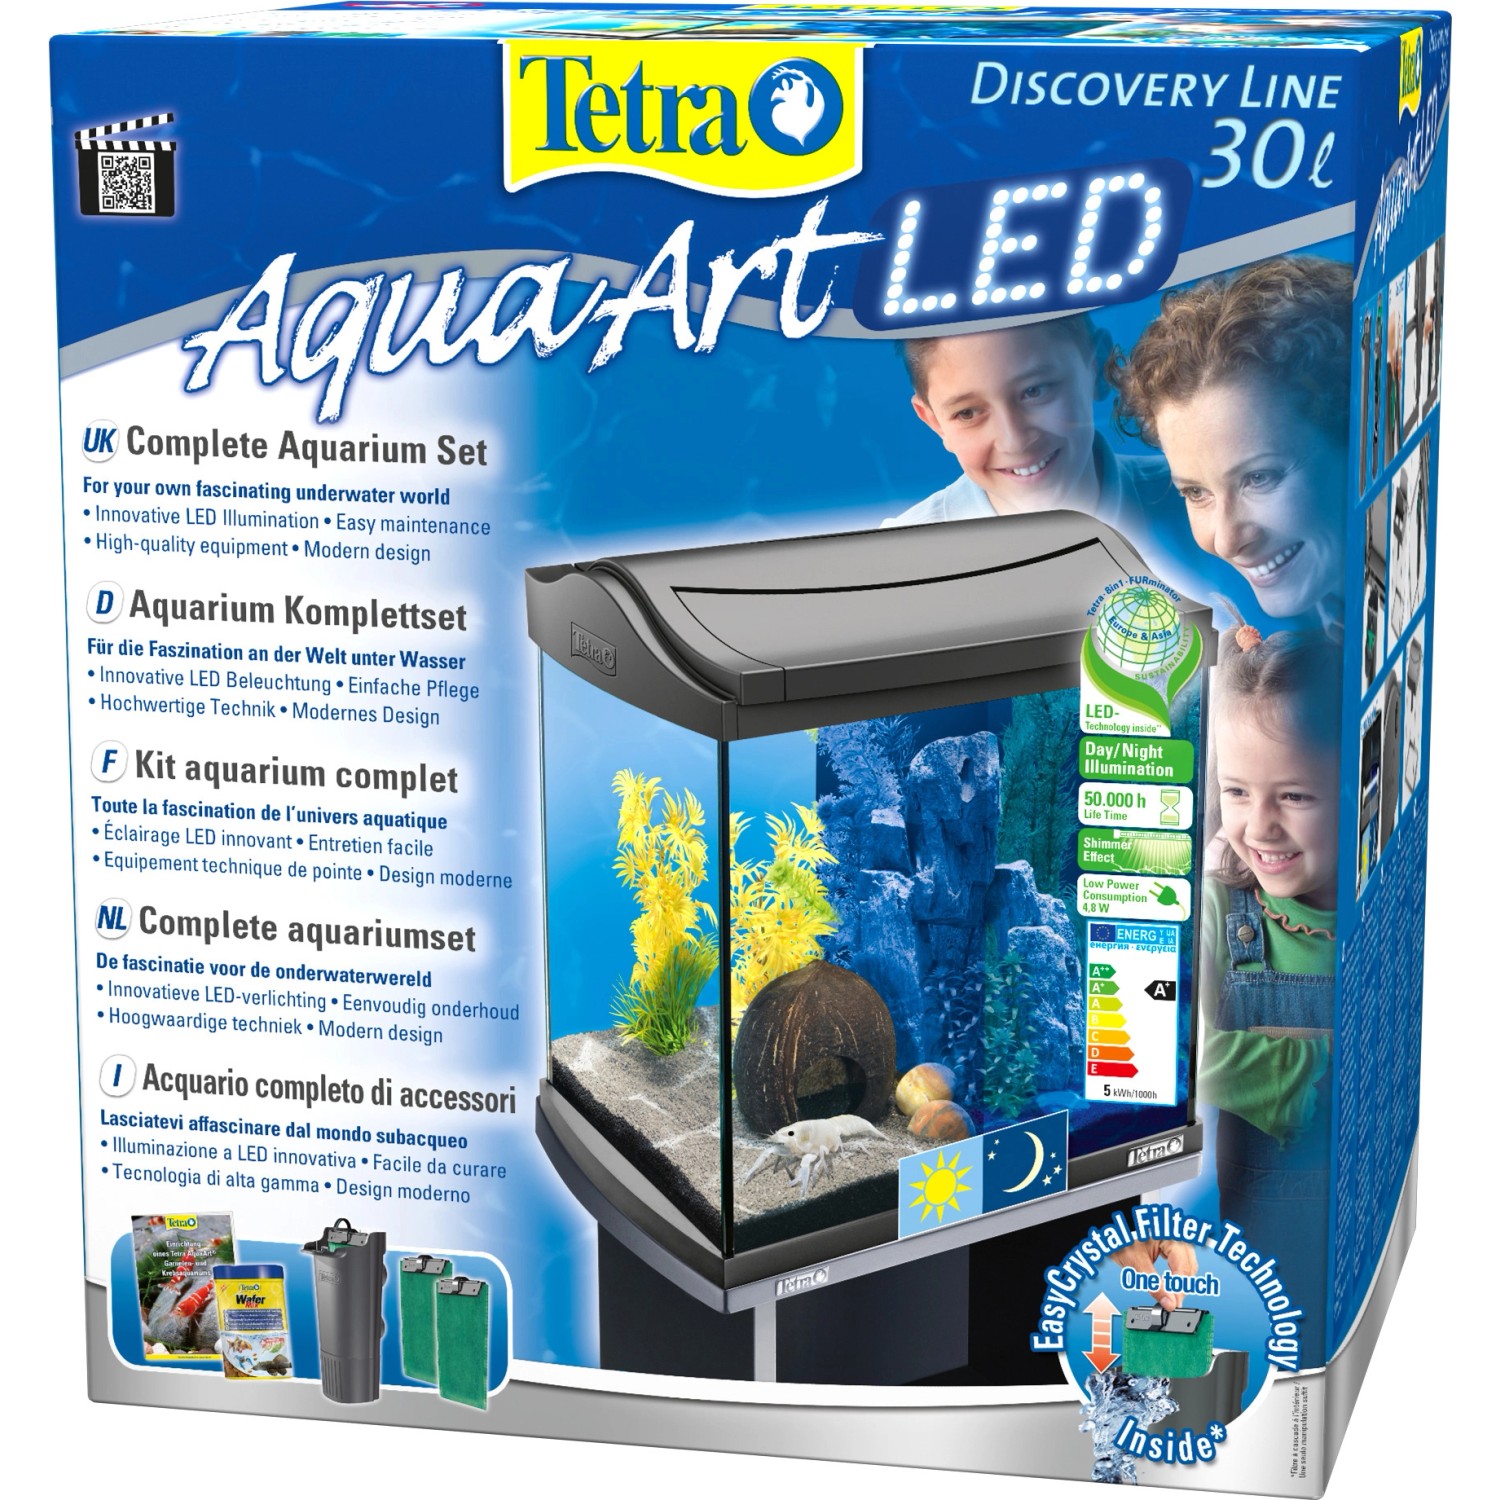 Tetra Aquarium-Set AquaArt Discovery Line bei LED kaufen OBI Anthrazit l 30